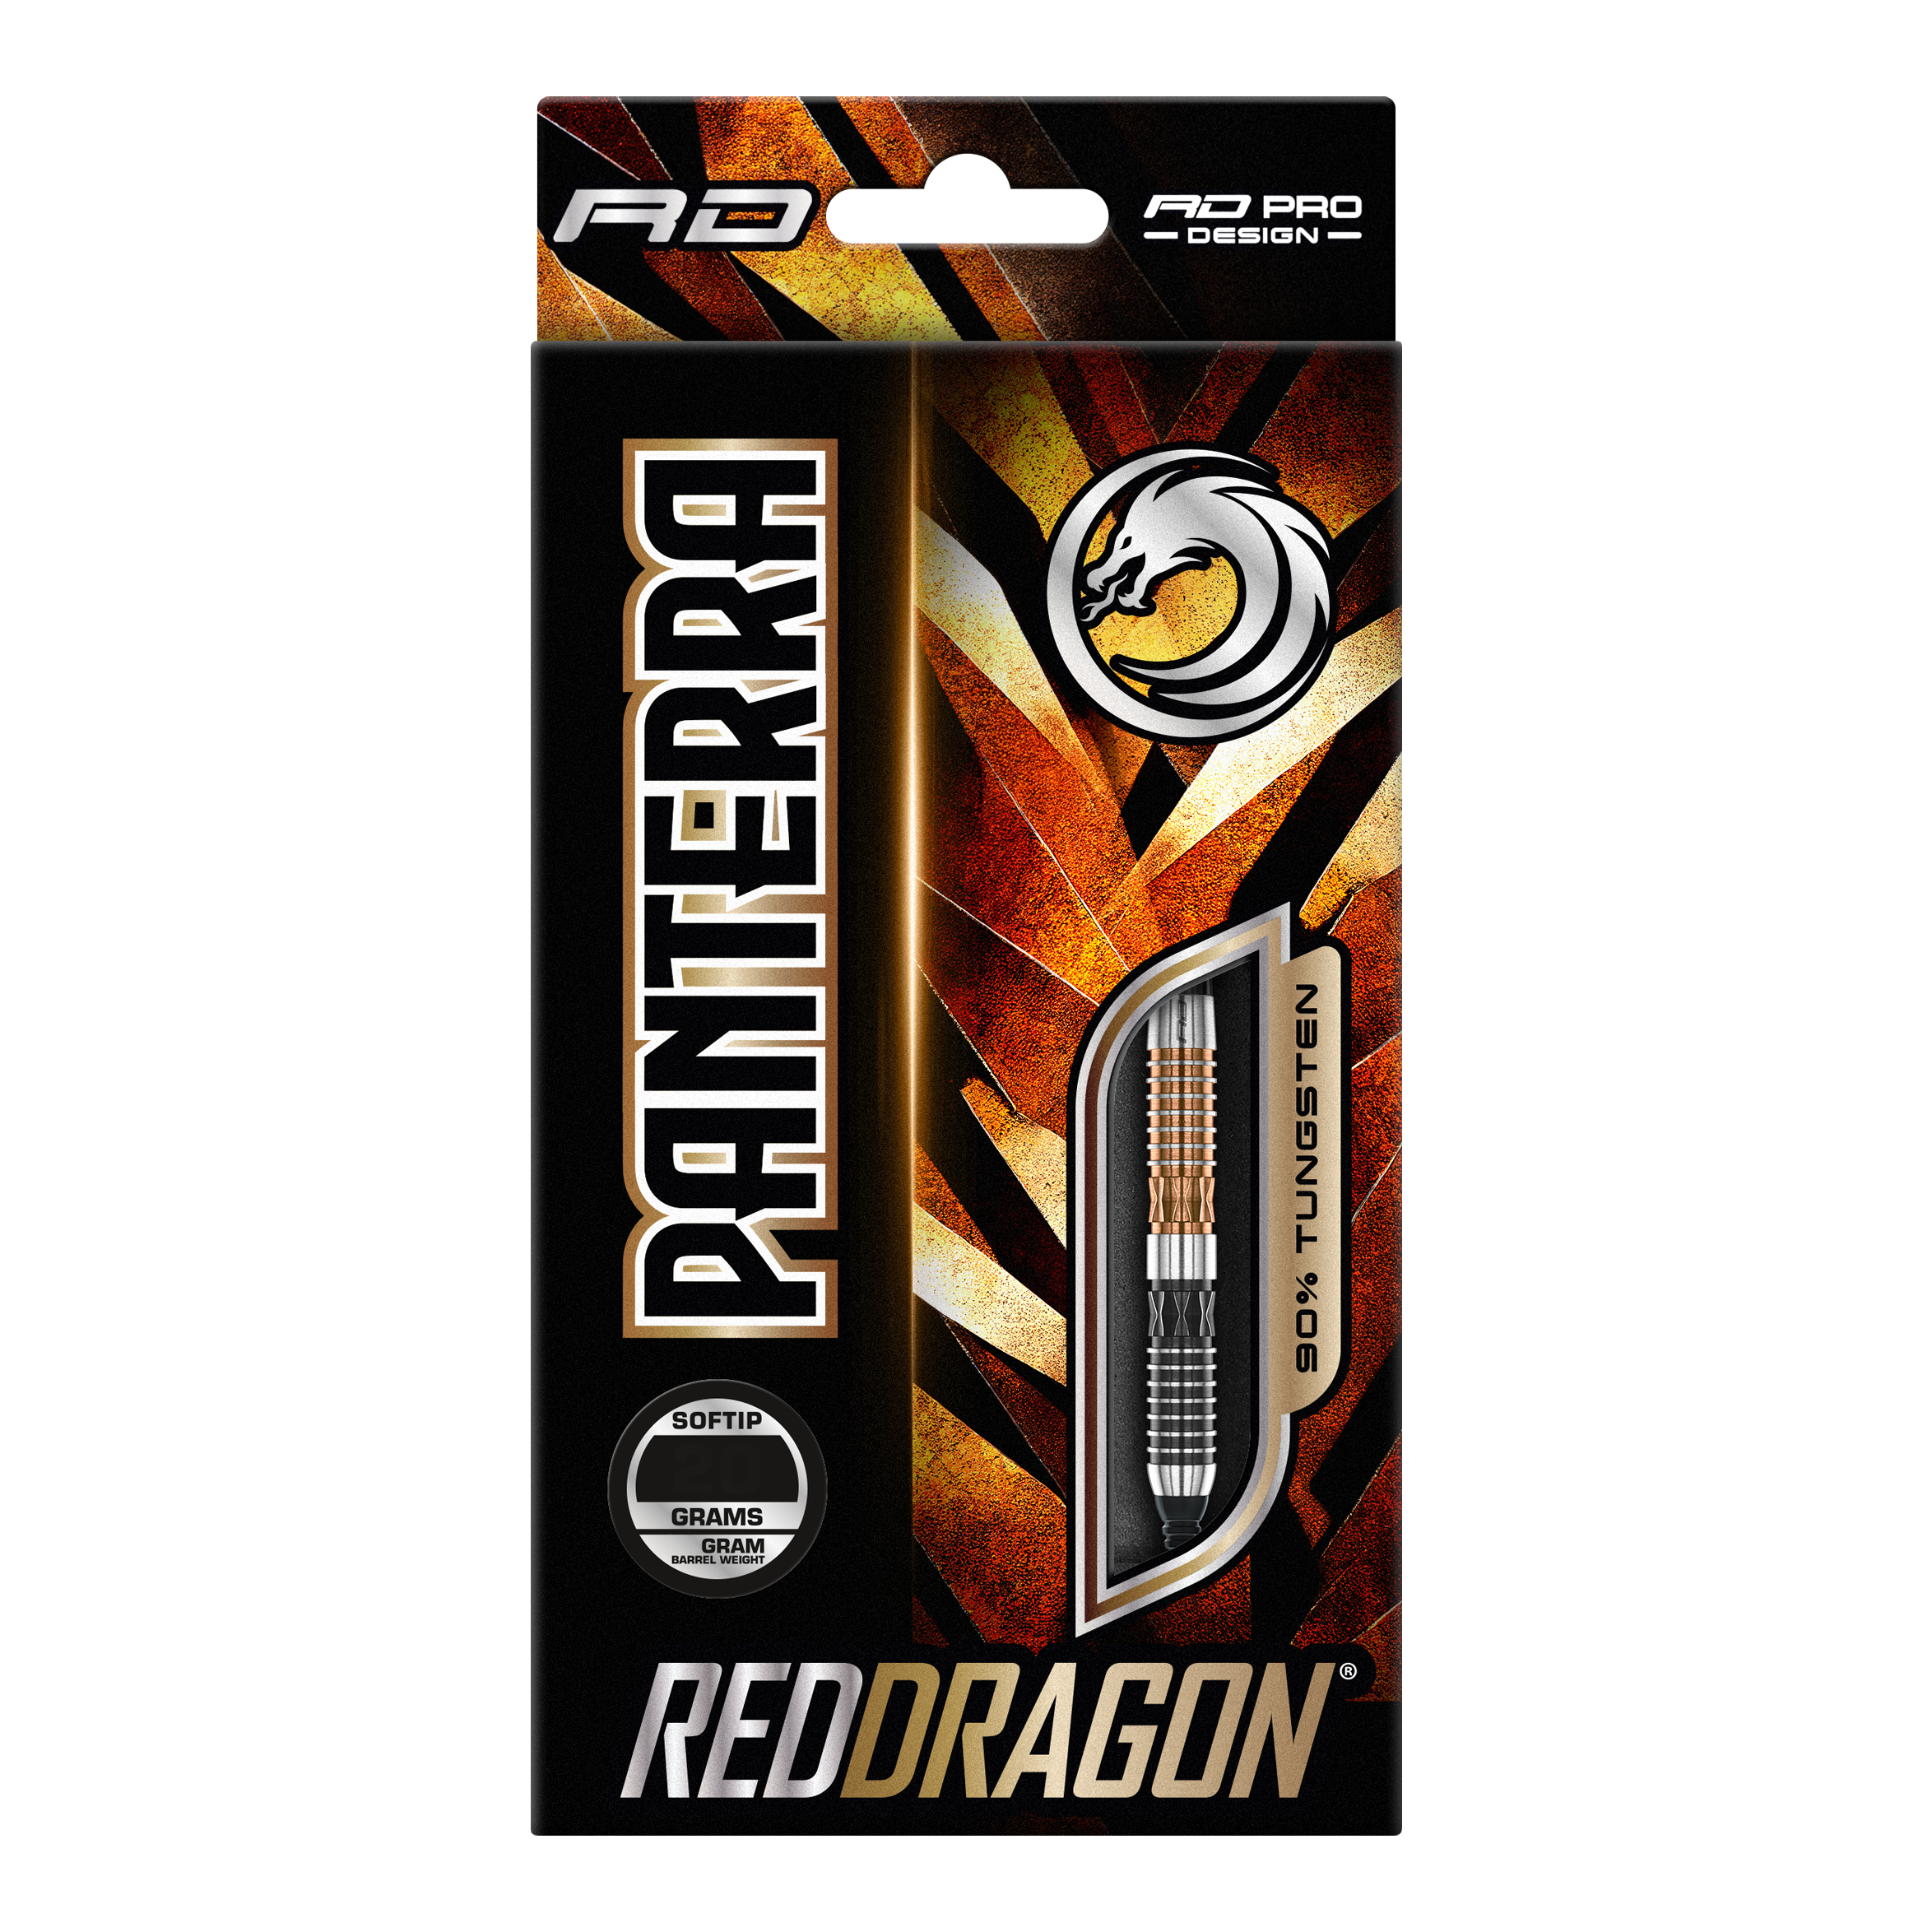 Red Dragon Panterra soft darts - 20g